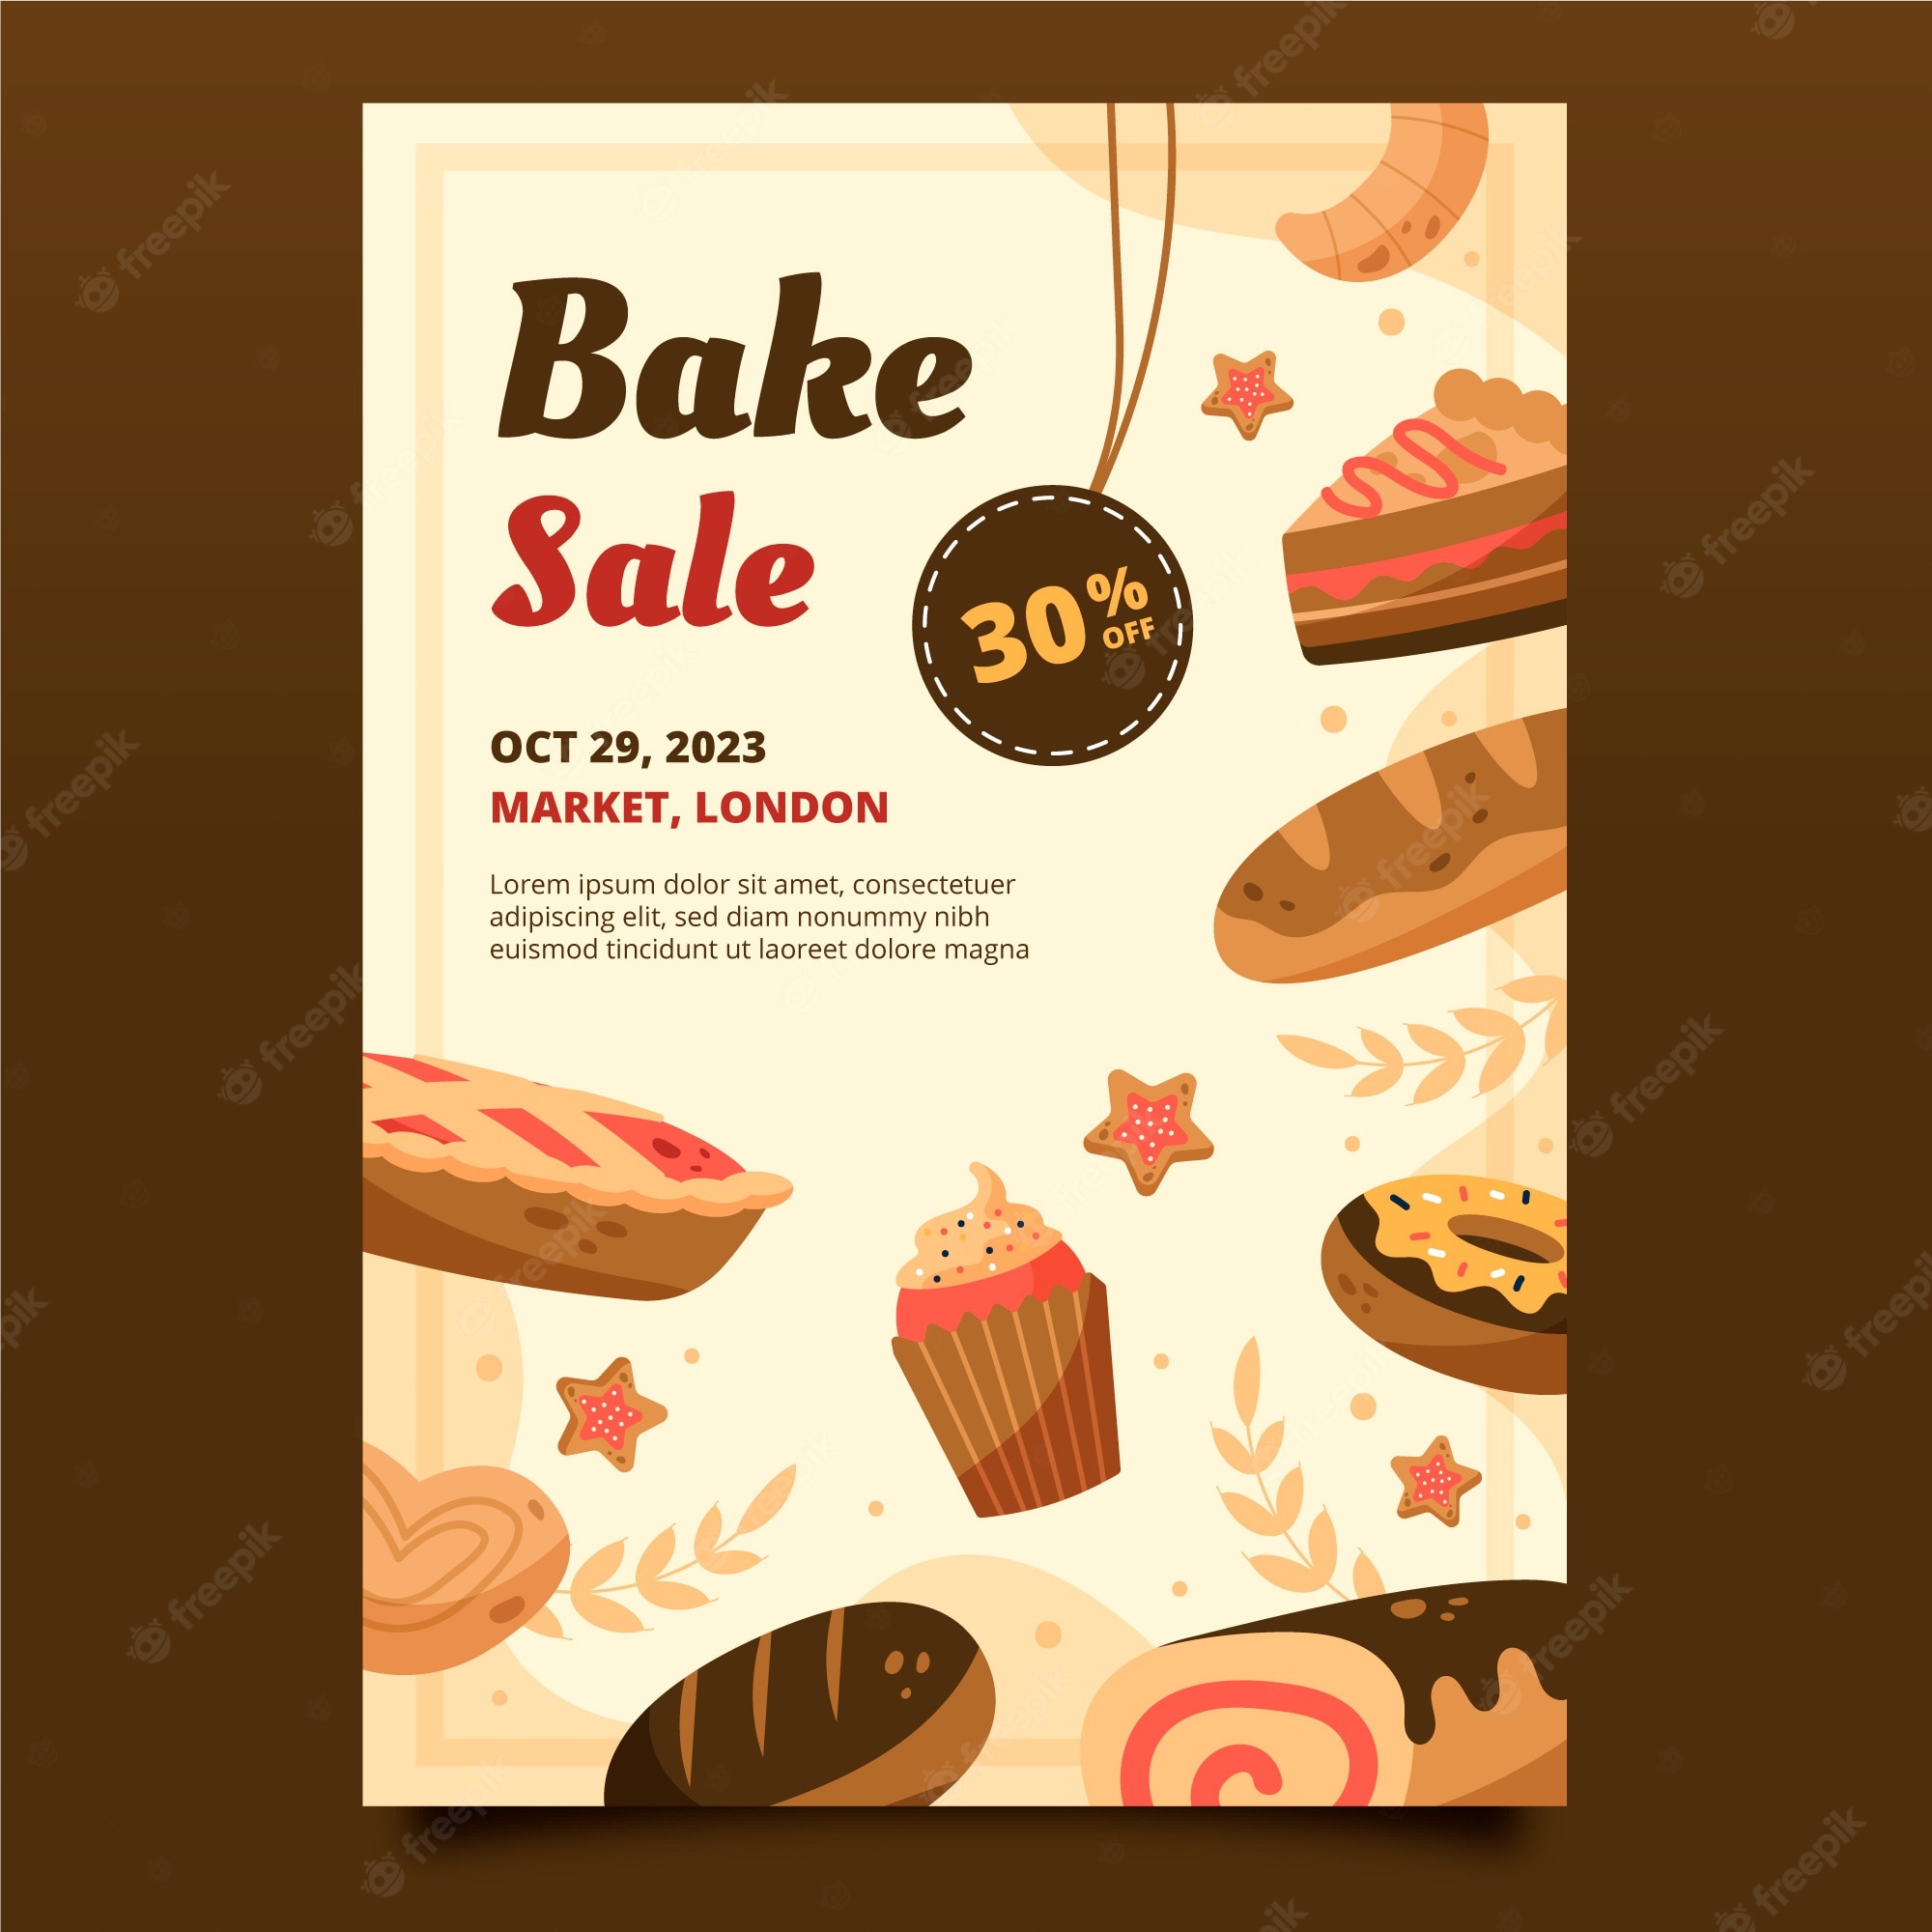 Bake Sale Backgrounds